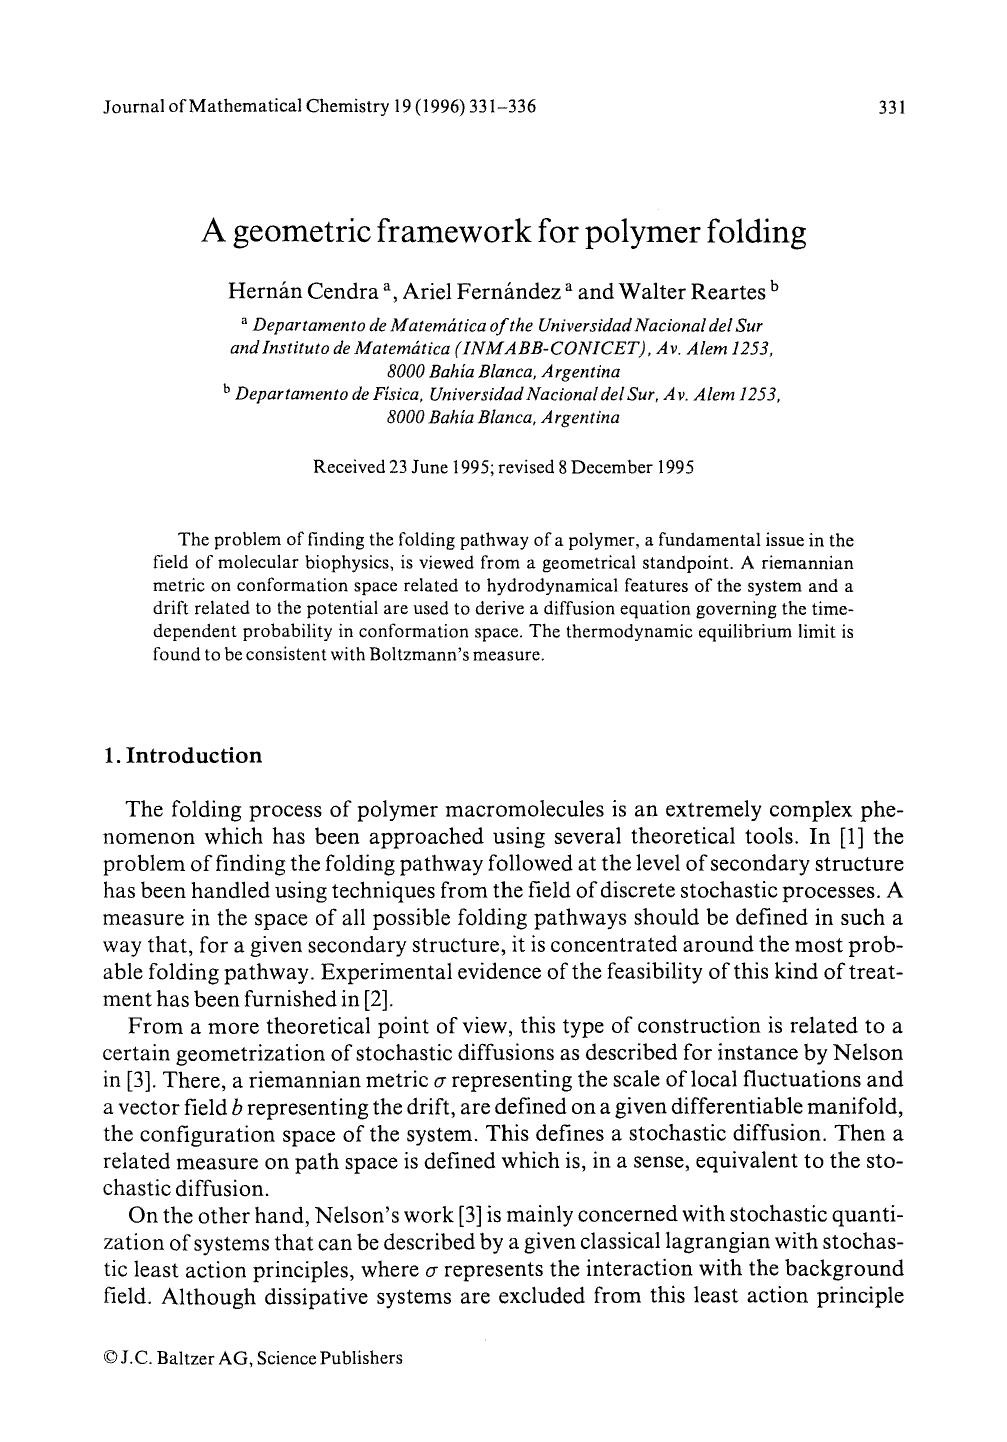 A geometric framework for polymer folding by Unknown